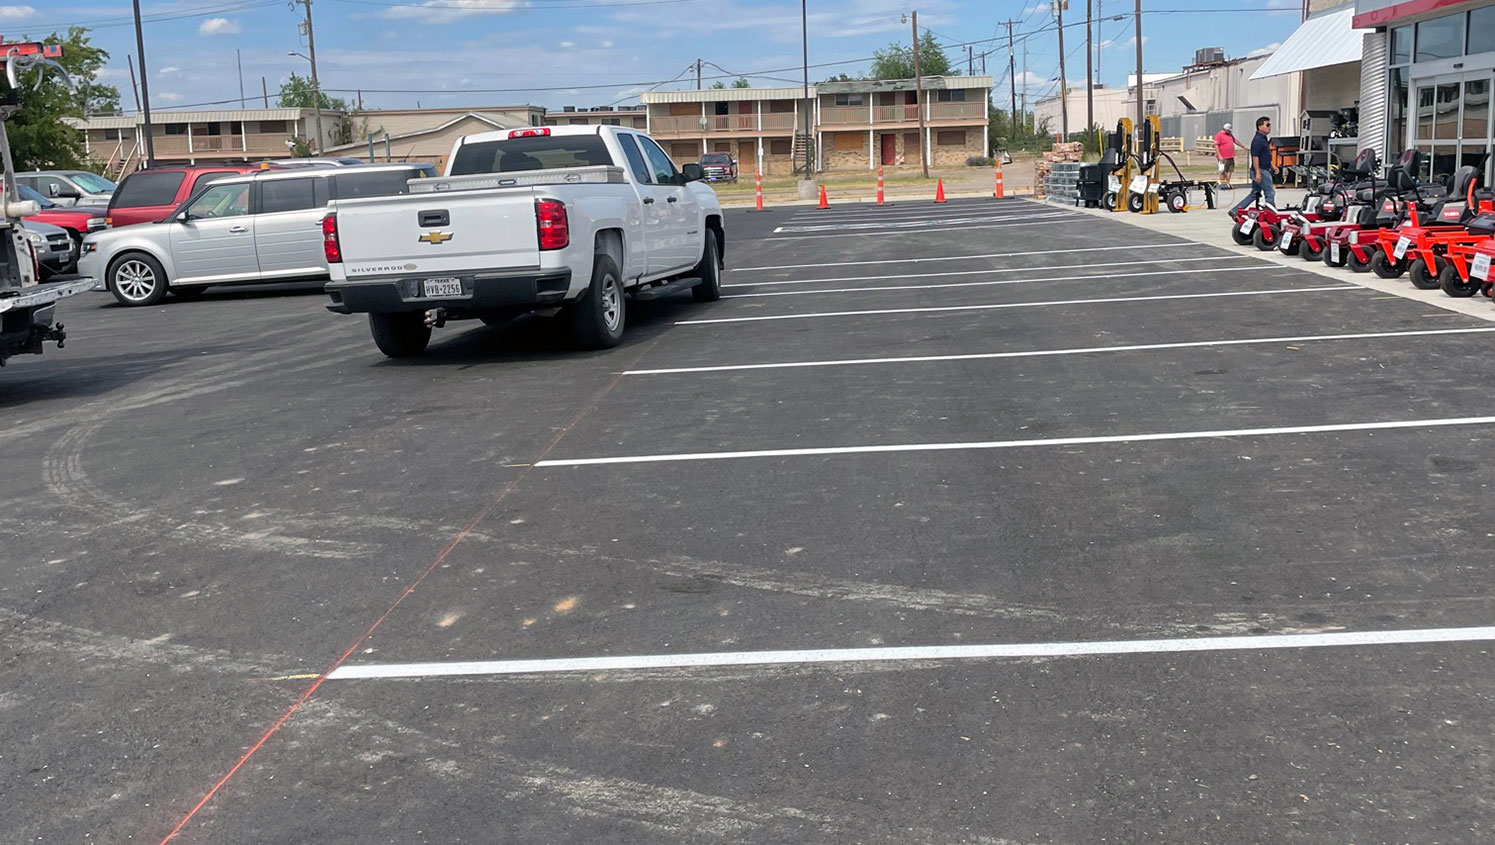 re-striped parking lot stalls